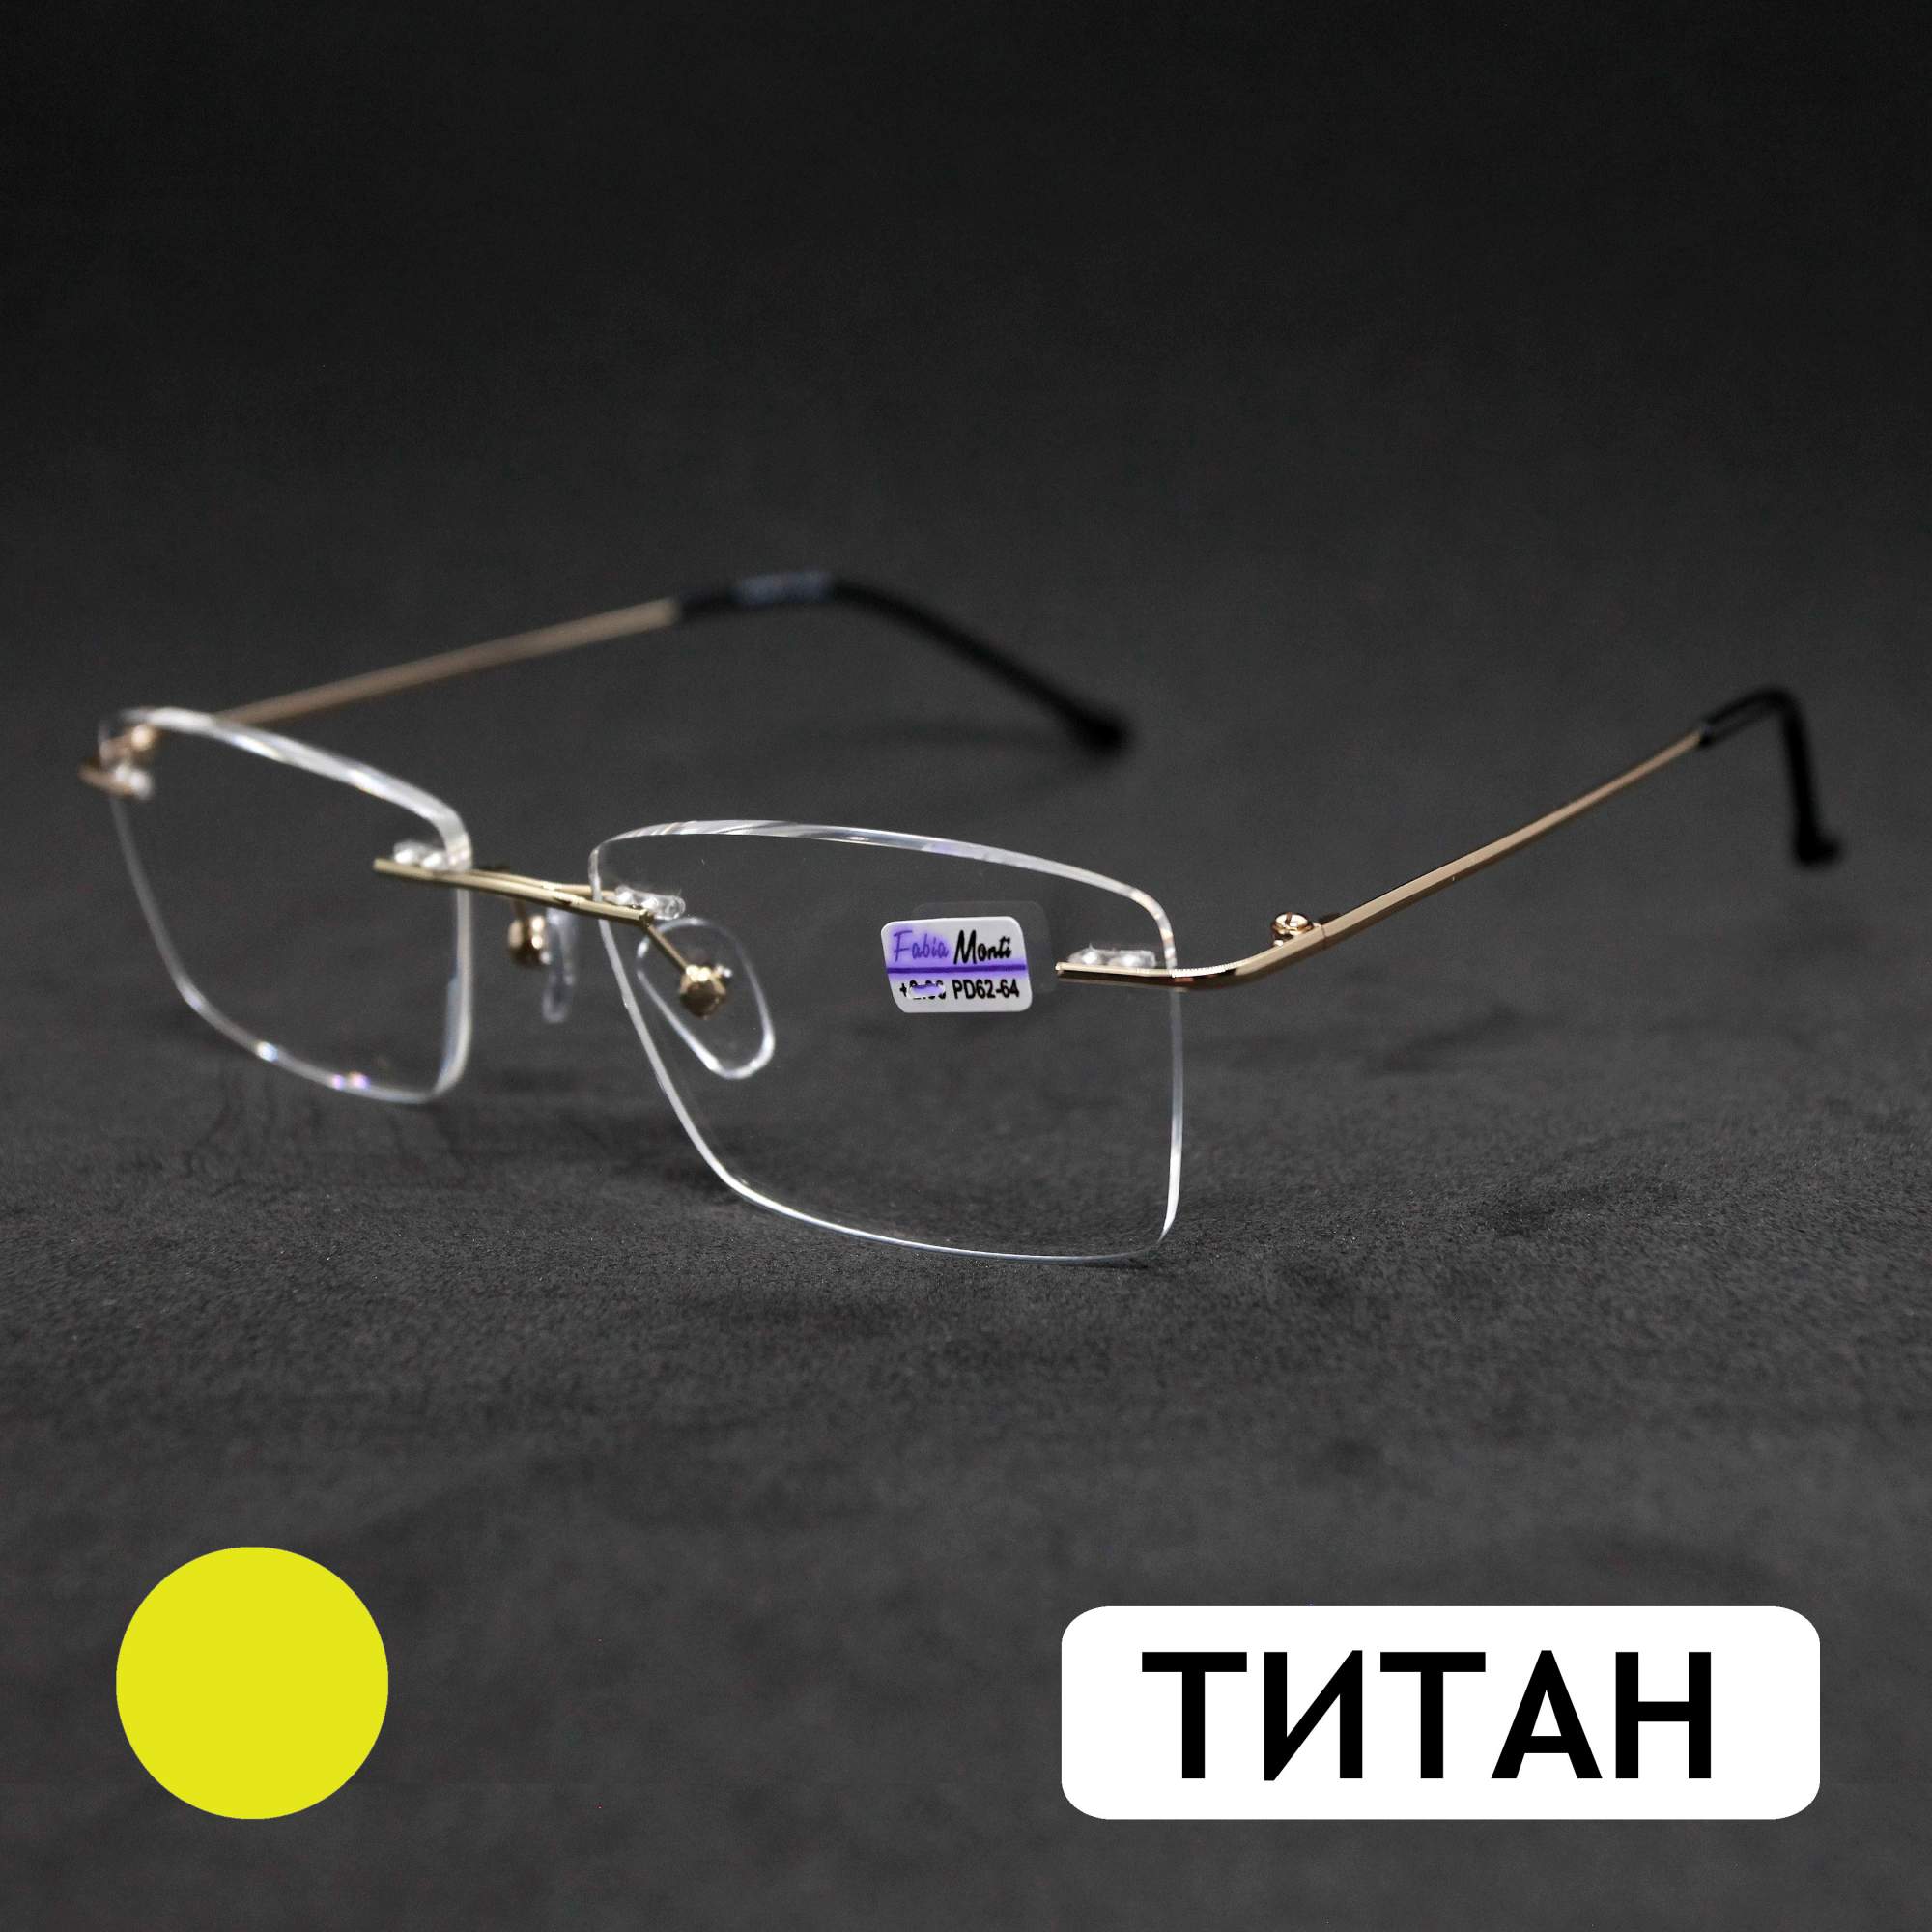 Безободковые очки FM 8959 +1.00, без футляра, оправа титан, золотые, РЦ 62-64